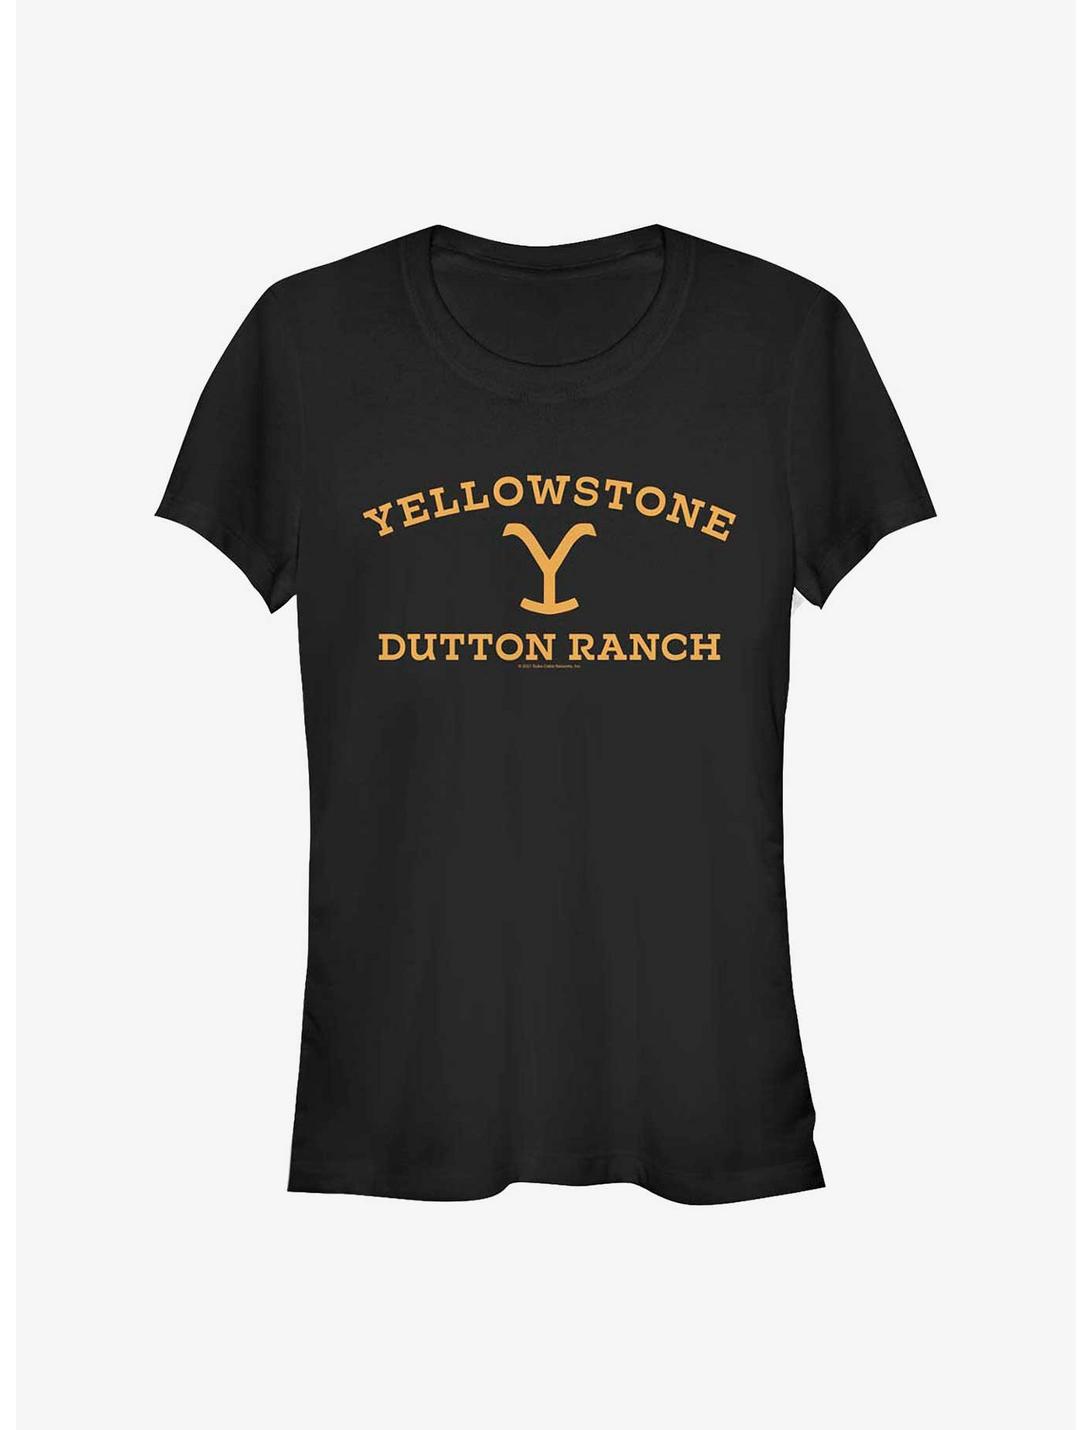 Yellowstone Dutton Ranch Logo Girls T-Shirt, BLACK, hi-res